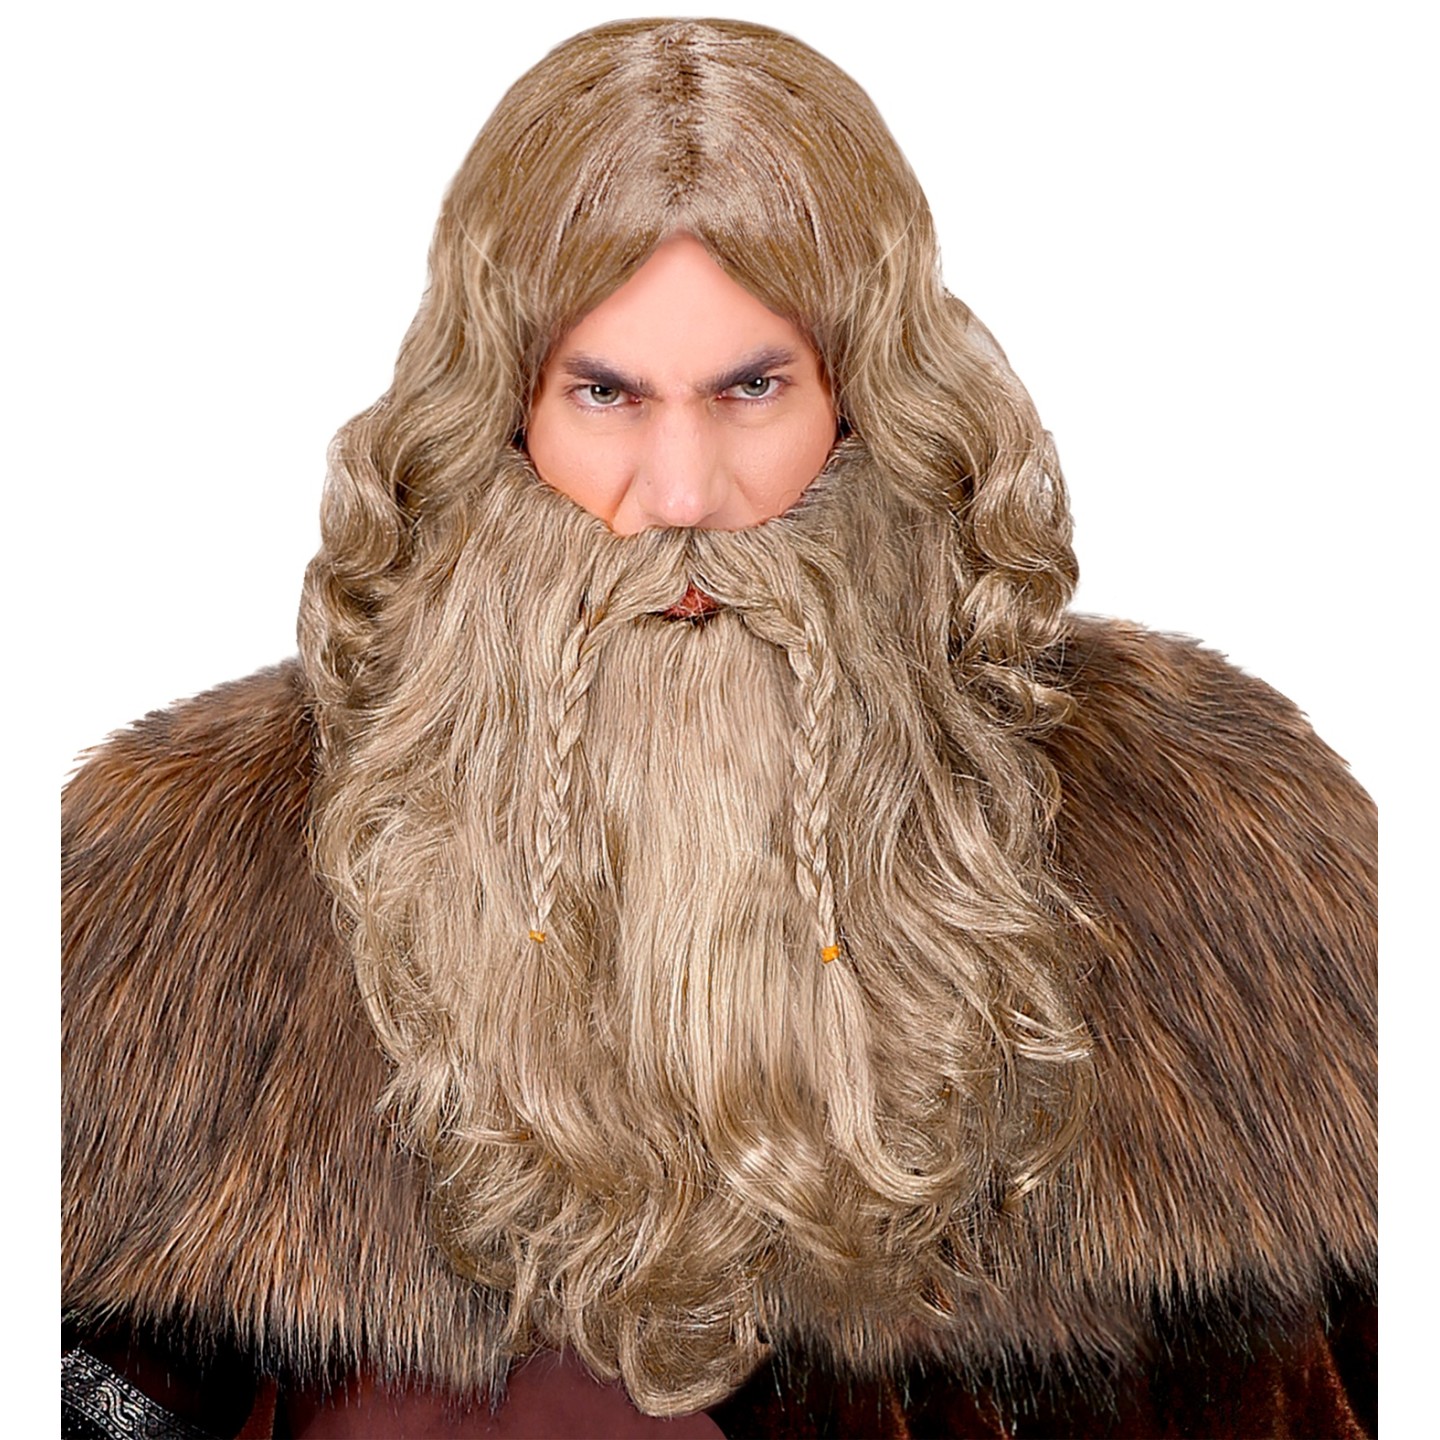 viking pruik baard snor carnavalspruik